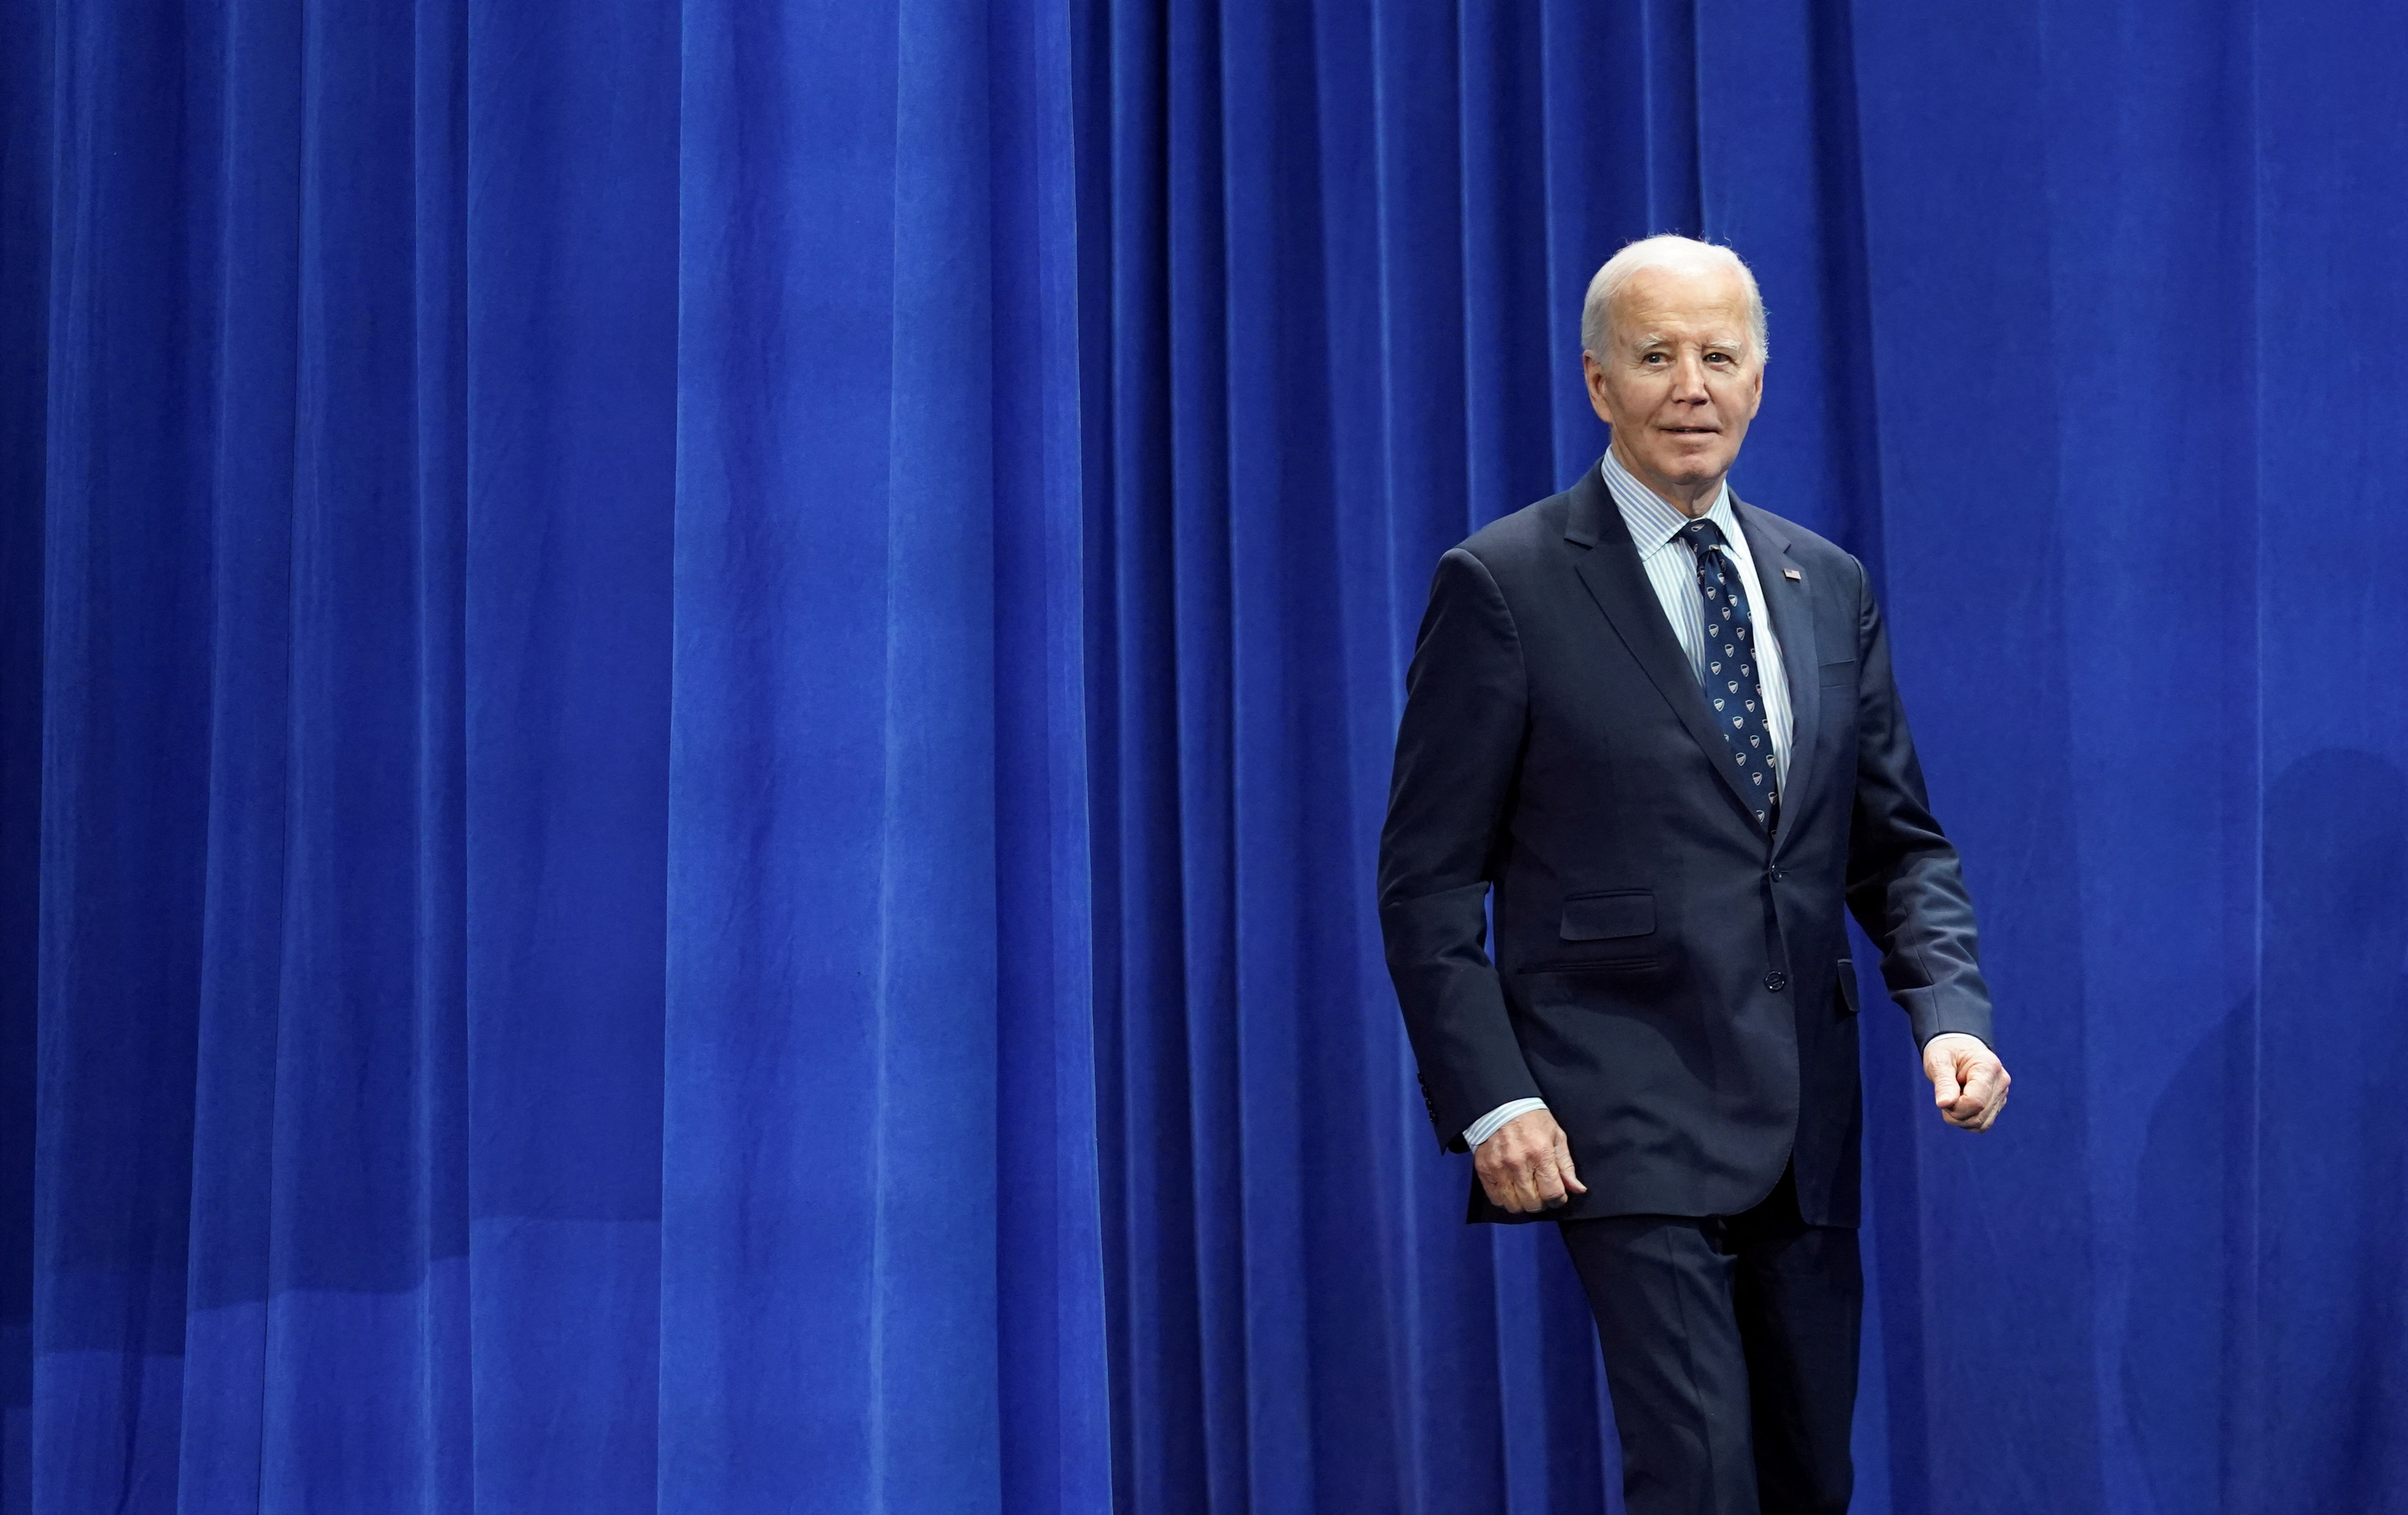 Biden speaks about student loan relief in Wisconsin